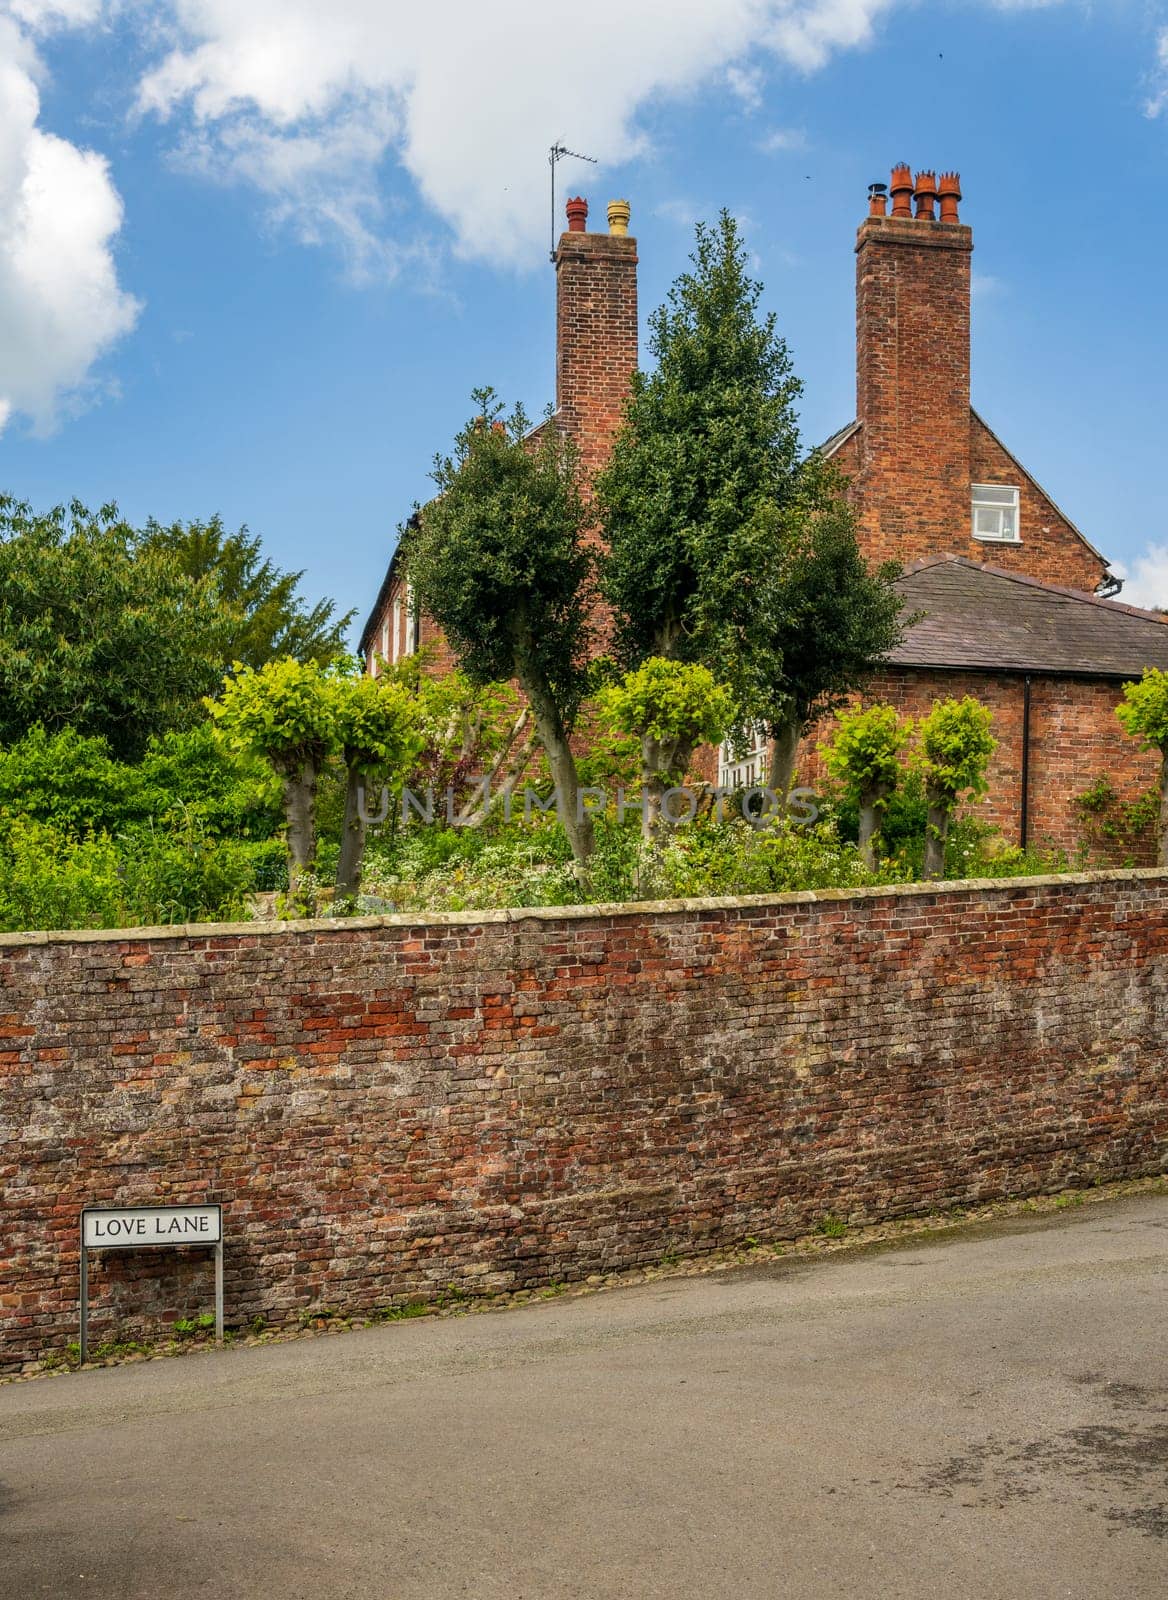 Georgian brick home by Love Lane in Ellesmere Shropshire by steheap